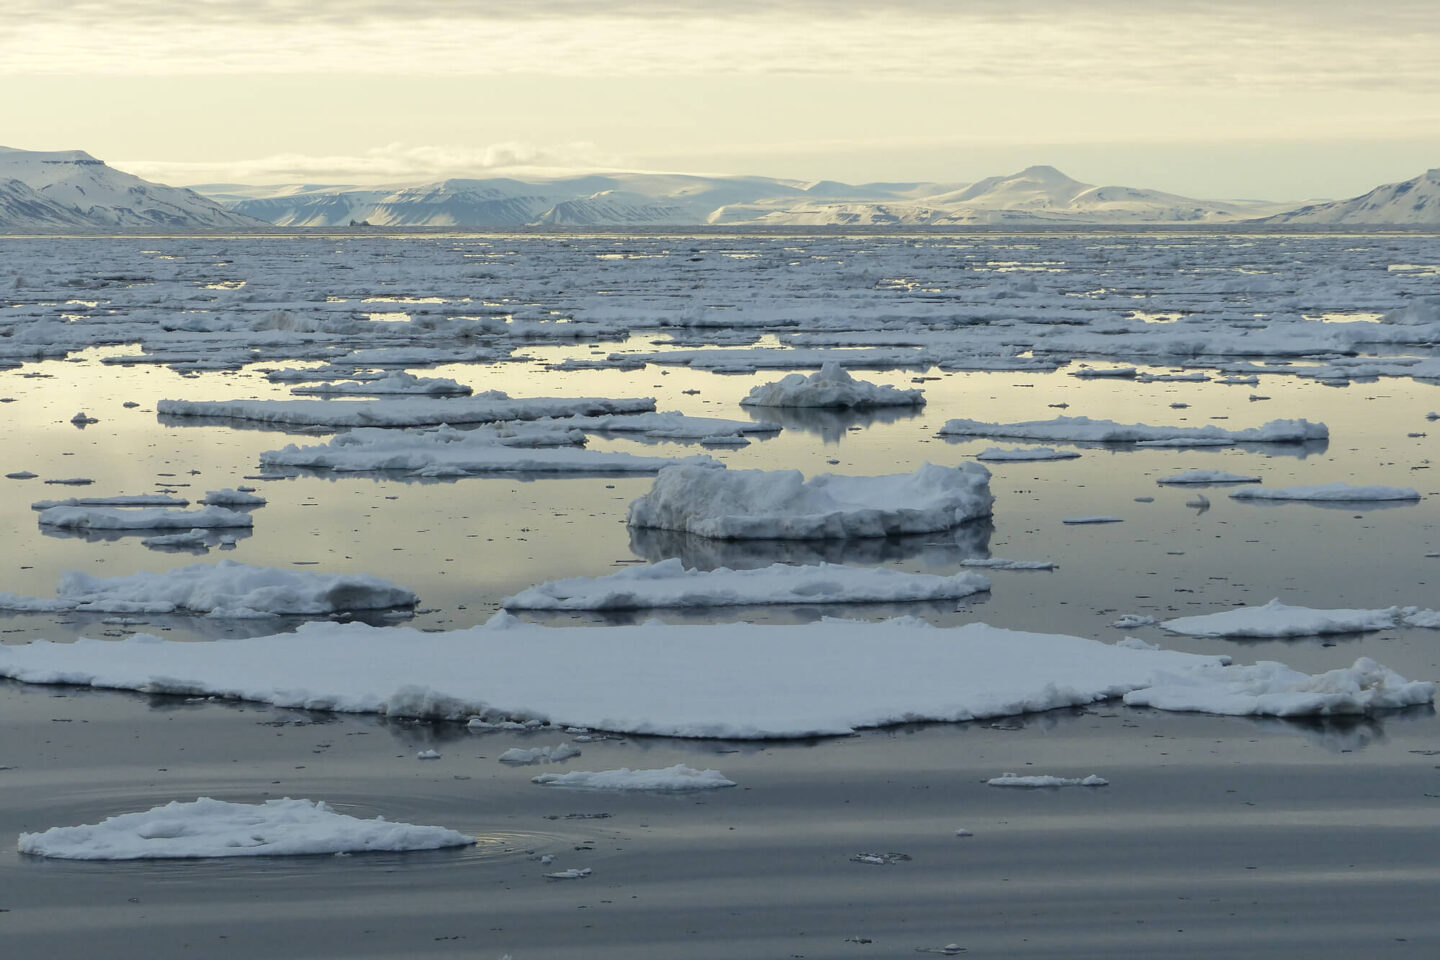 svalbard-sea-ice-on-calm-water-pf